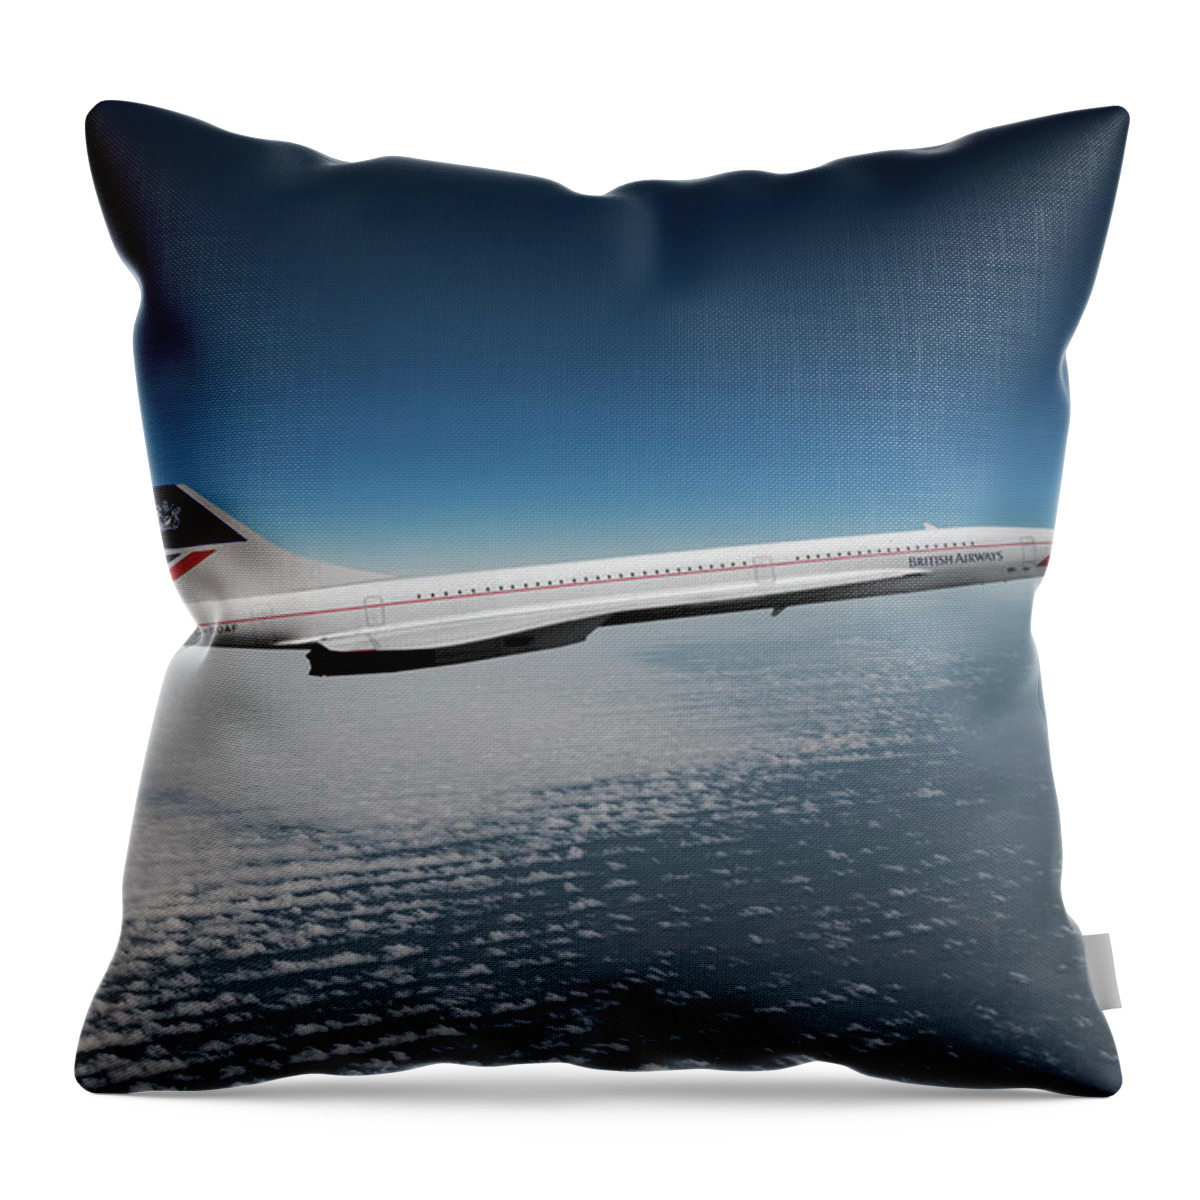 British Airways Throw Pillow featuring the mixed media British Airways Supersonic Transport by Erik Simonsen